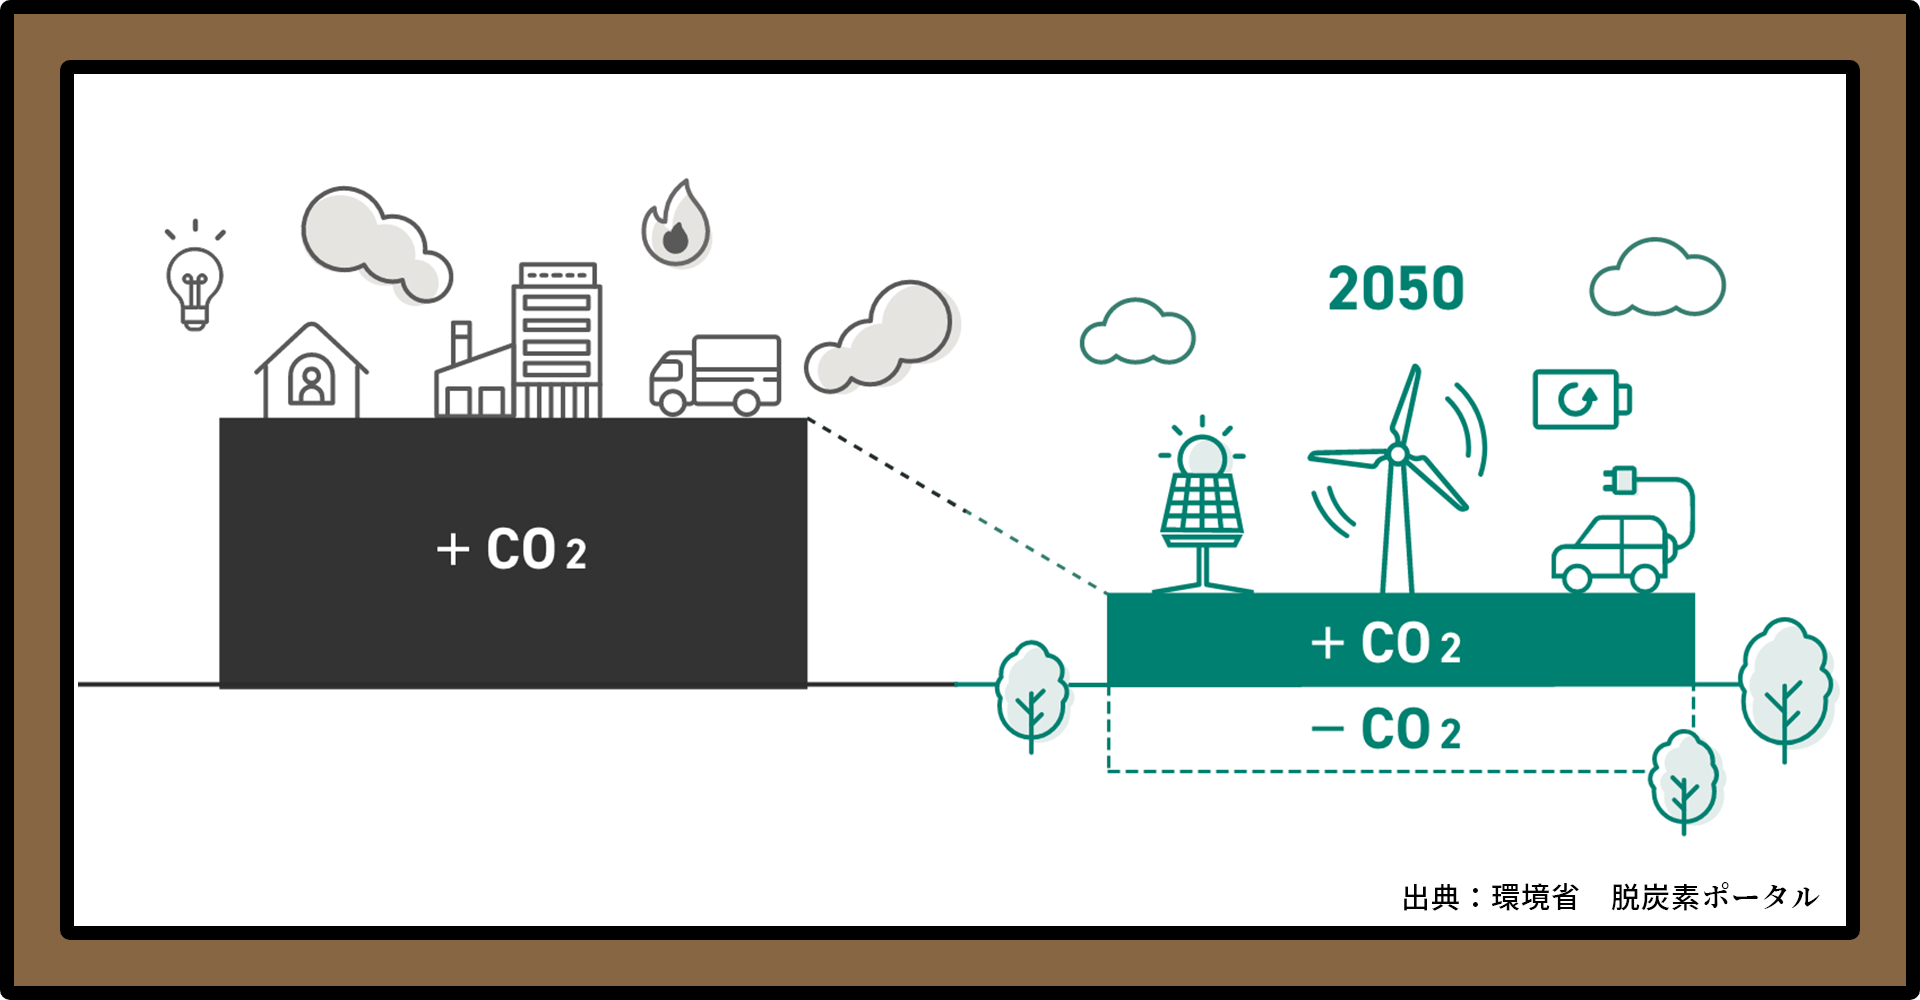 CO2を排出→CO2を実質的にゼロに→吸収・削減